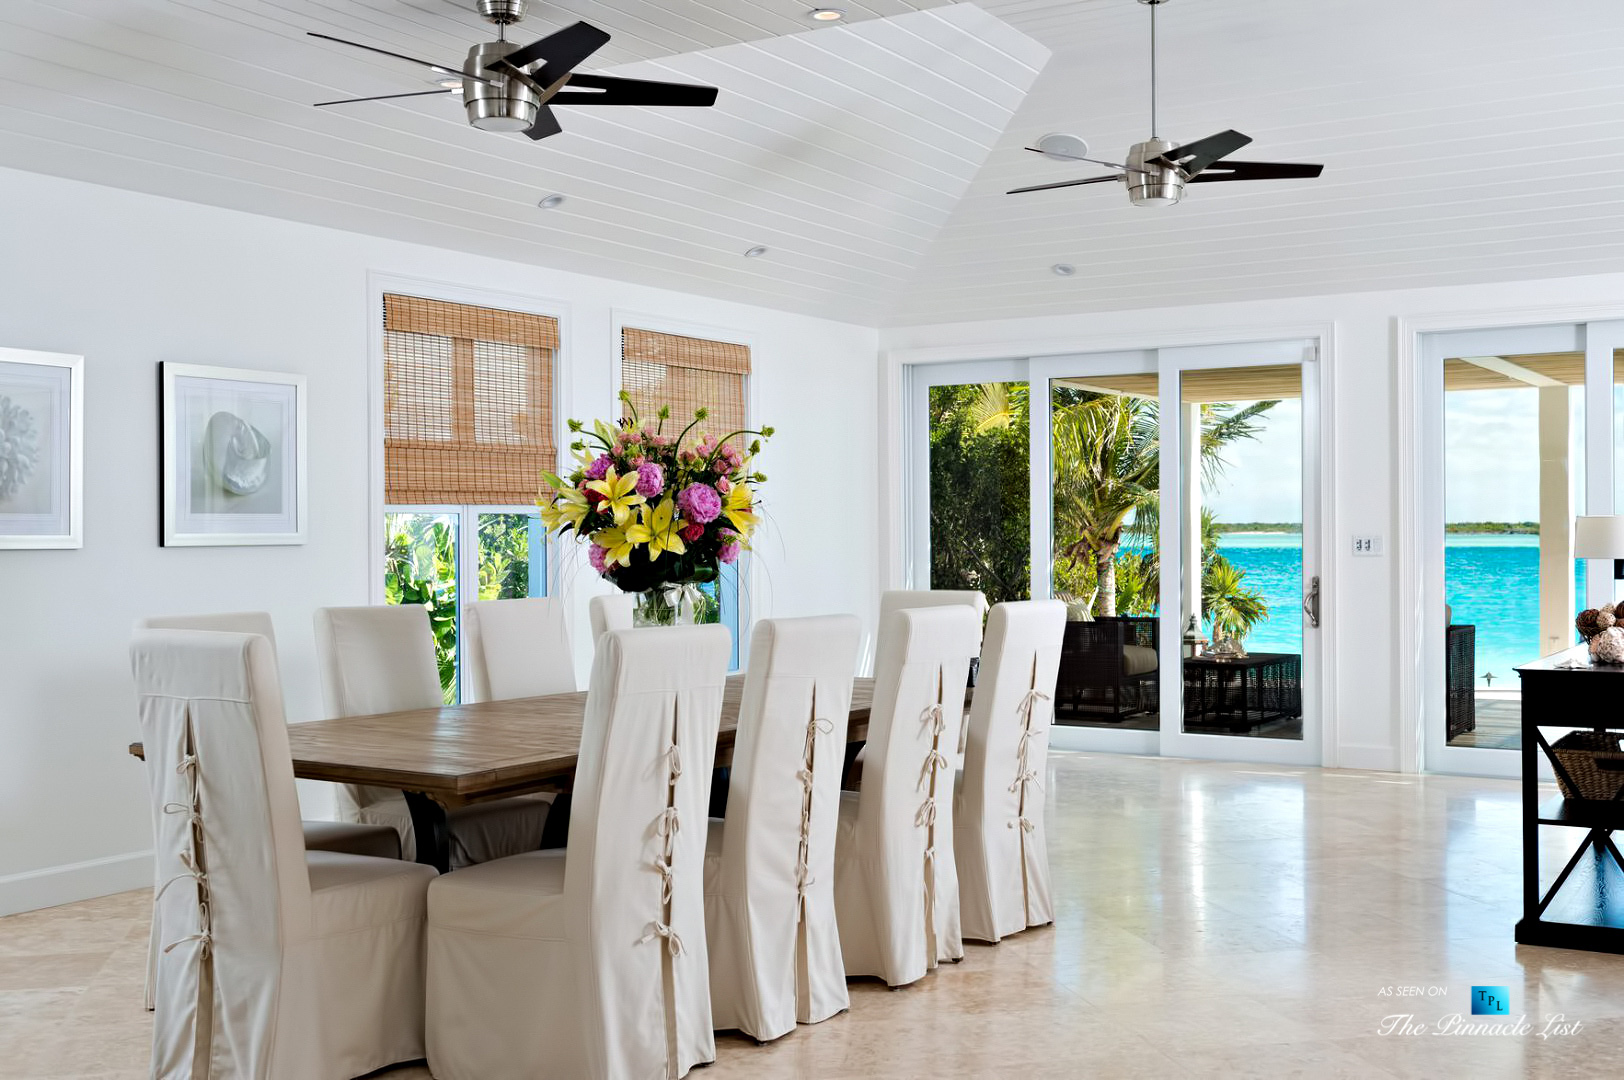 Villa Aquazure - Providenciales, Turks and Caicos Islands - Oceanview Dining Room - Luxury Real Estate - Beachfront Home